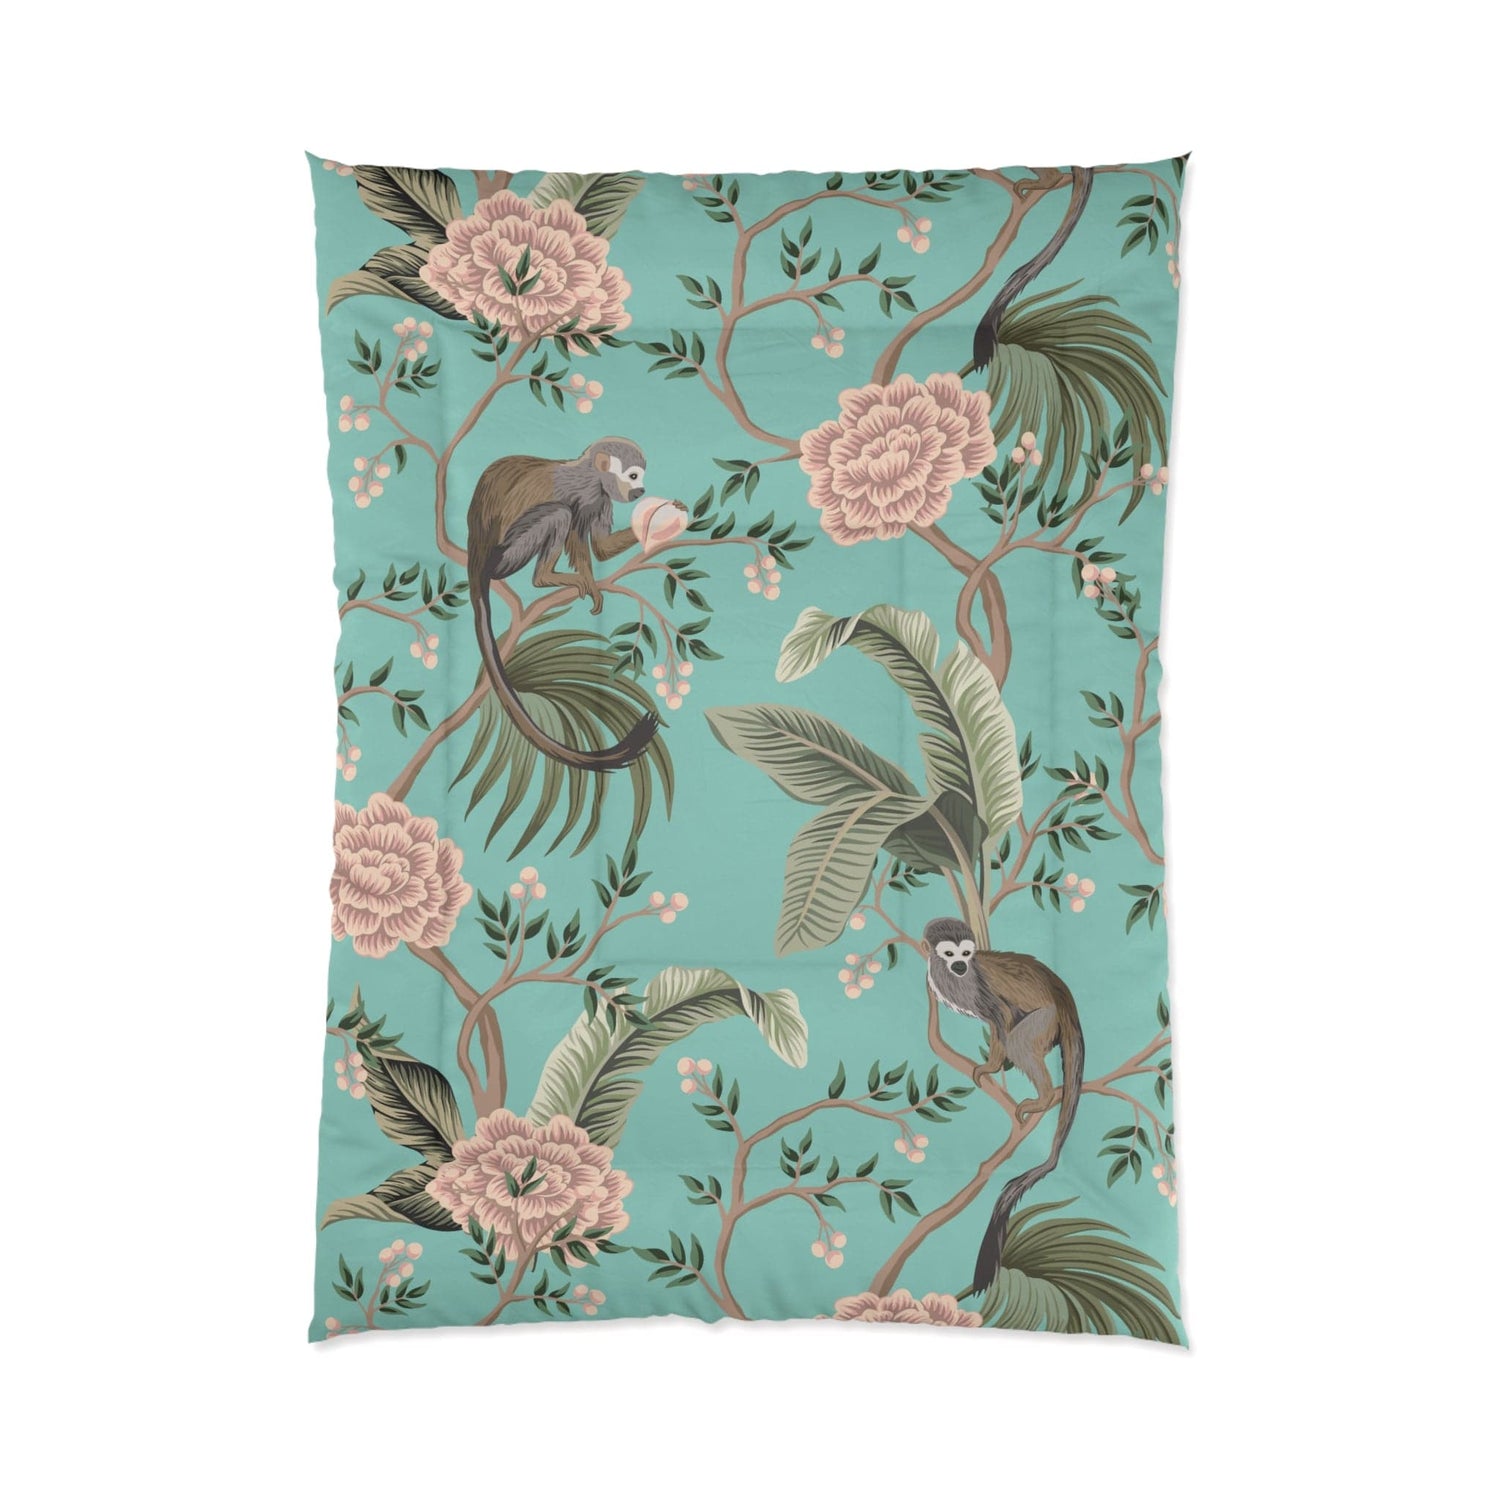 Kate McEnroe New York Chinoiserie Monkey Floral Comforter, Teal Pink Botanical Bedding Comforters